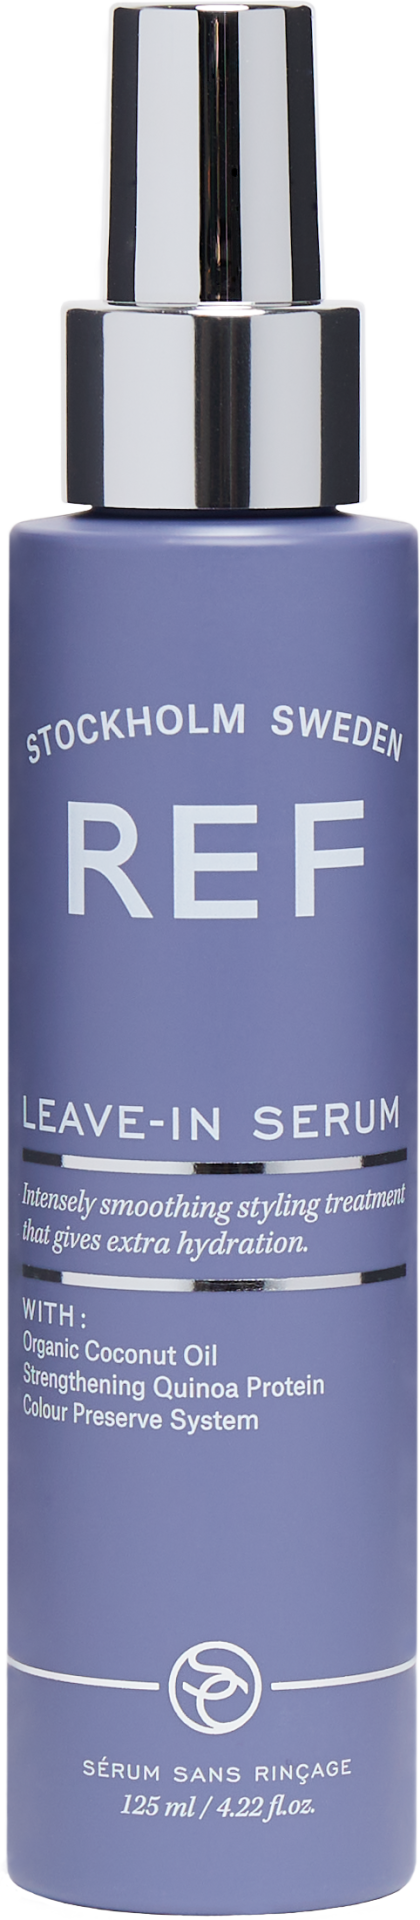 leave in serum